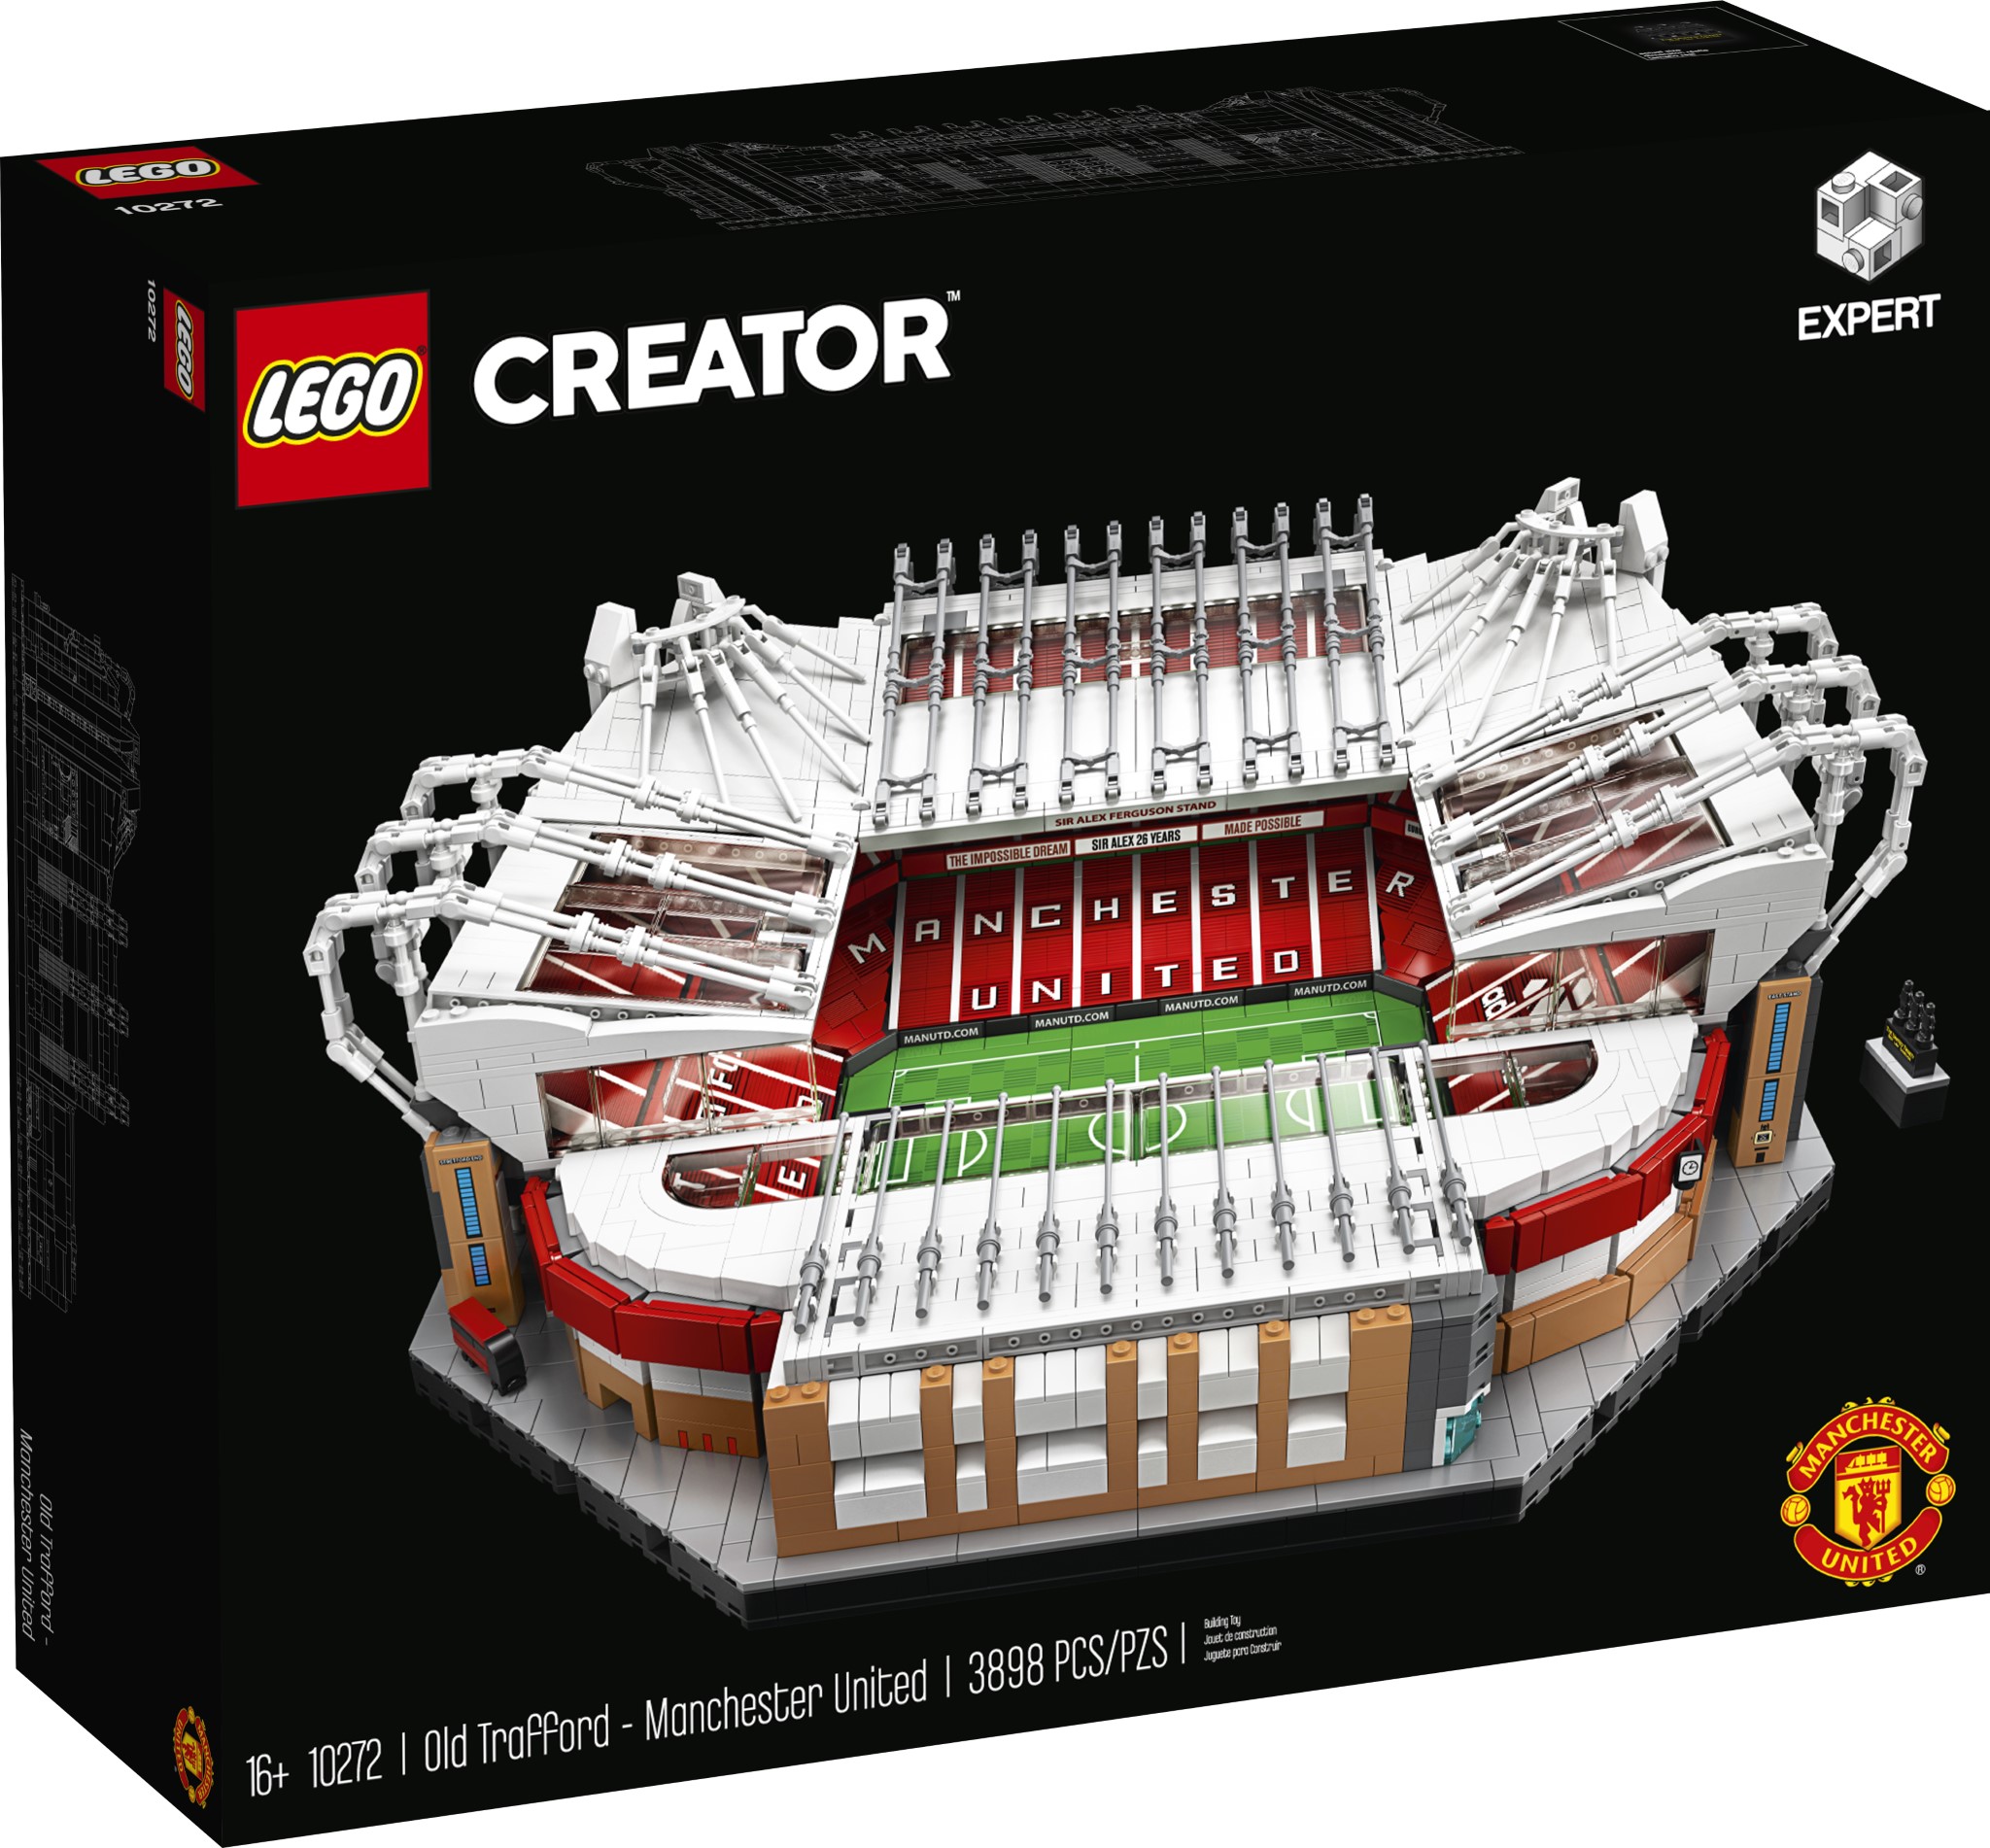 LEGO Creator Expert Old Trafford - Manchester United (10272